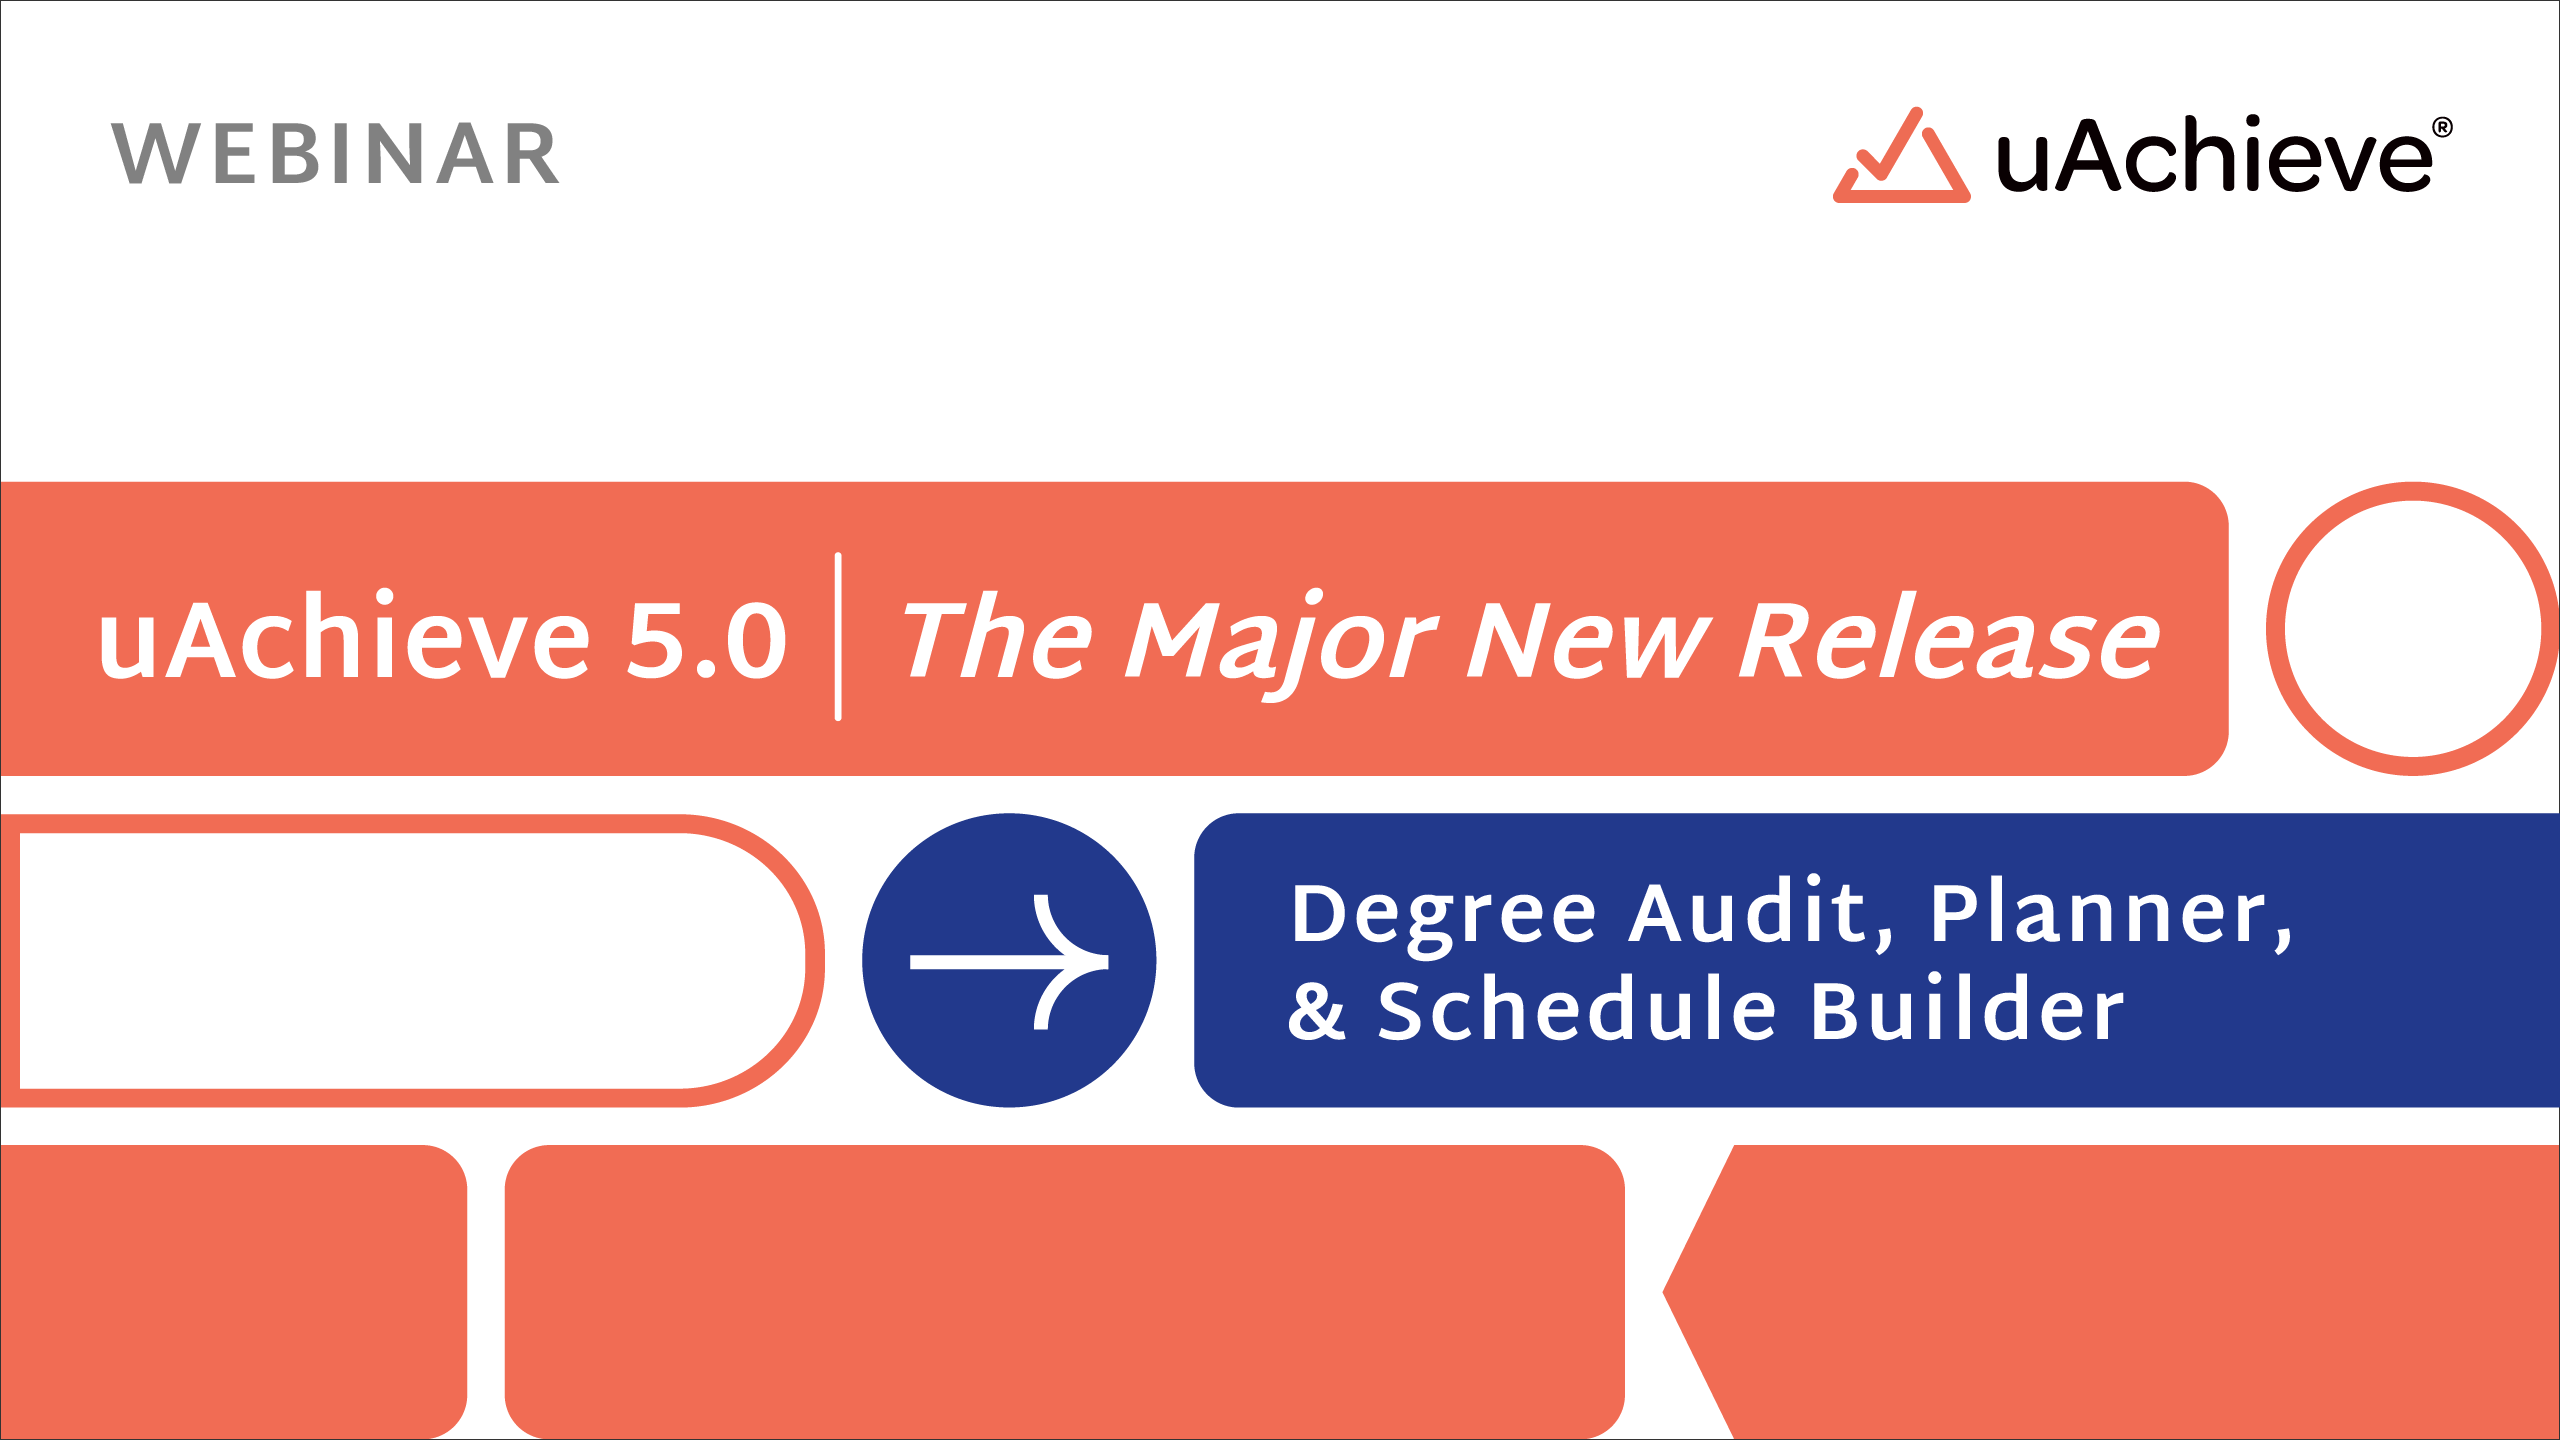 uAchieve 5.0 Degree Audit, Planner, & Schedule Builder: The Major New Release